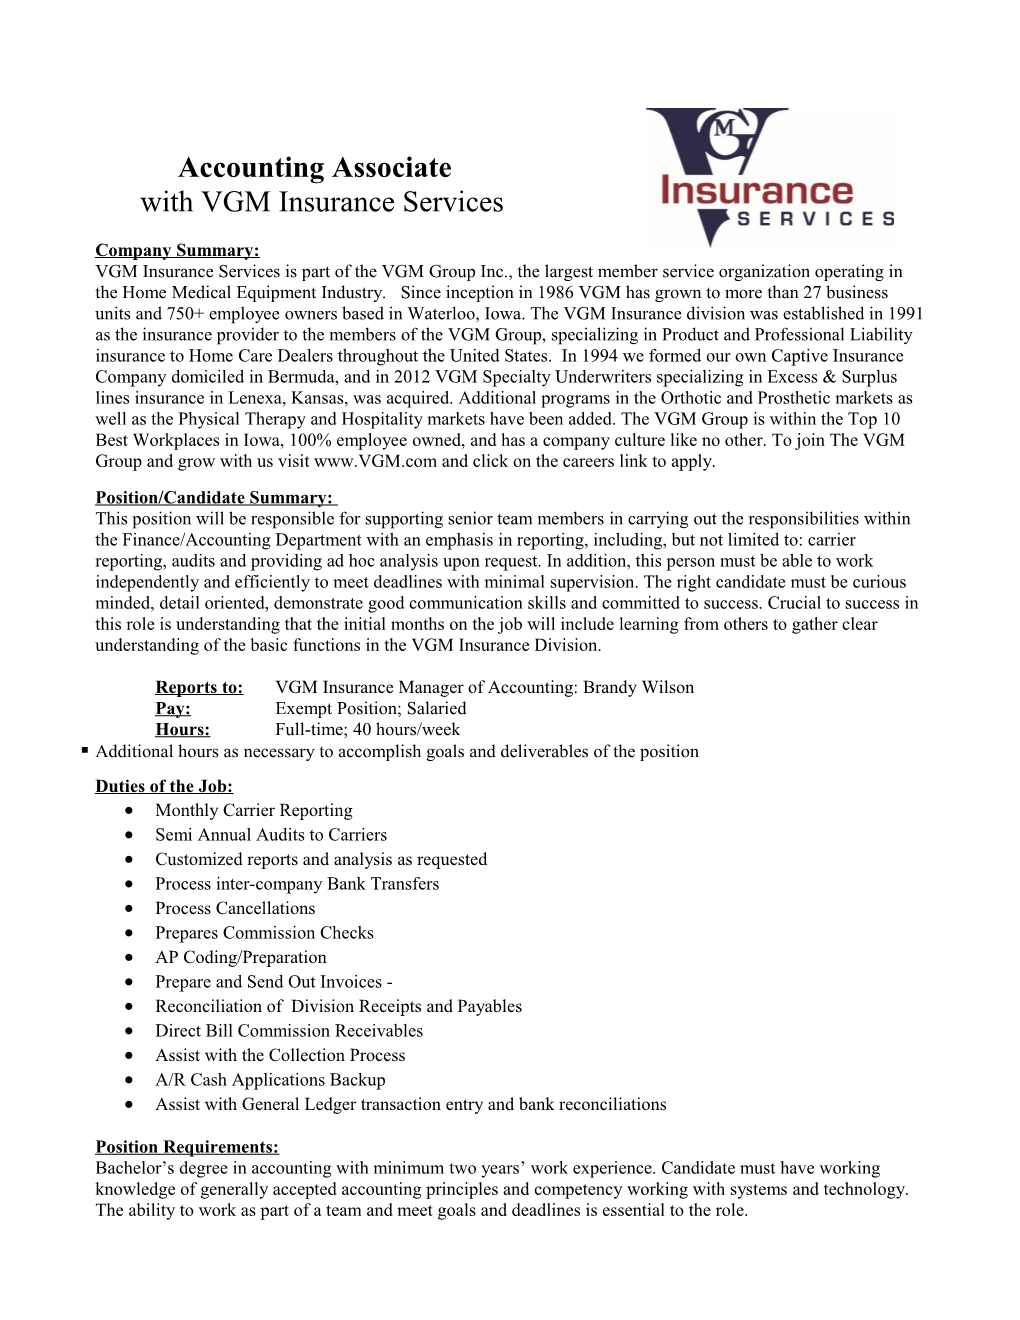 Job Description VGM Insurance Accountant